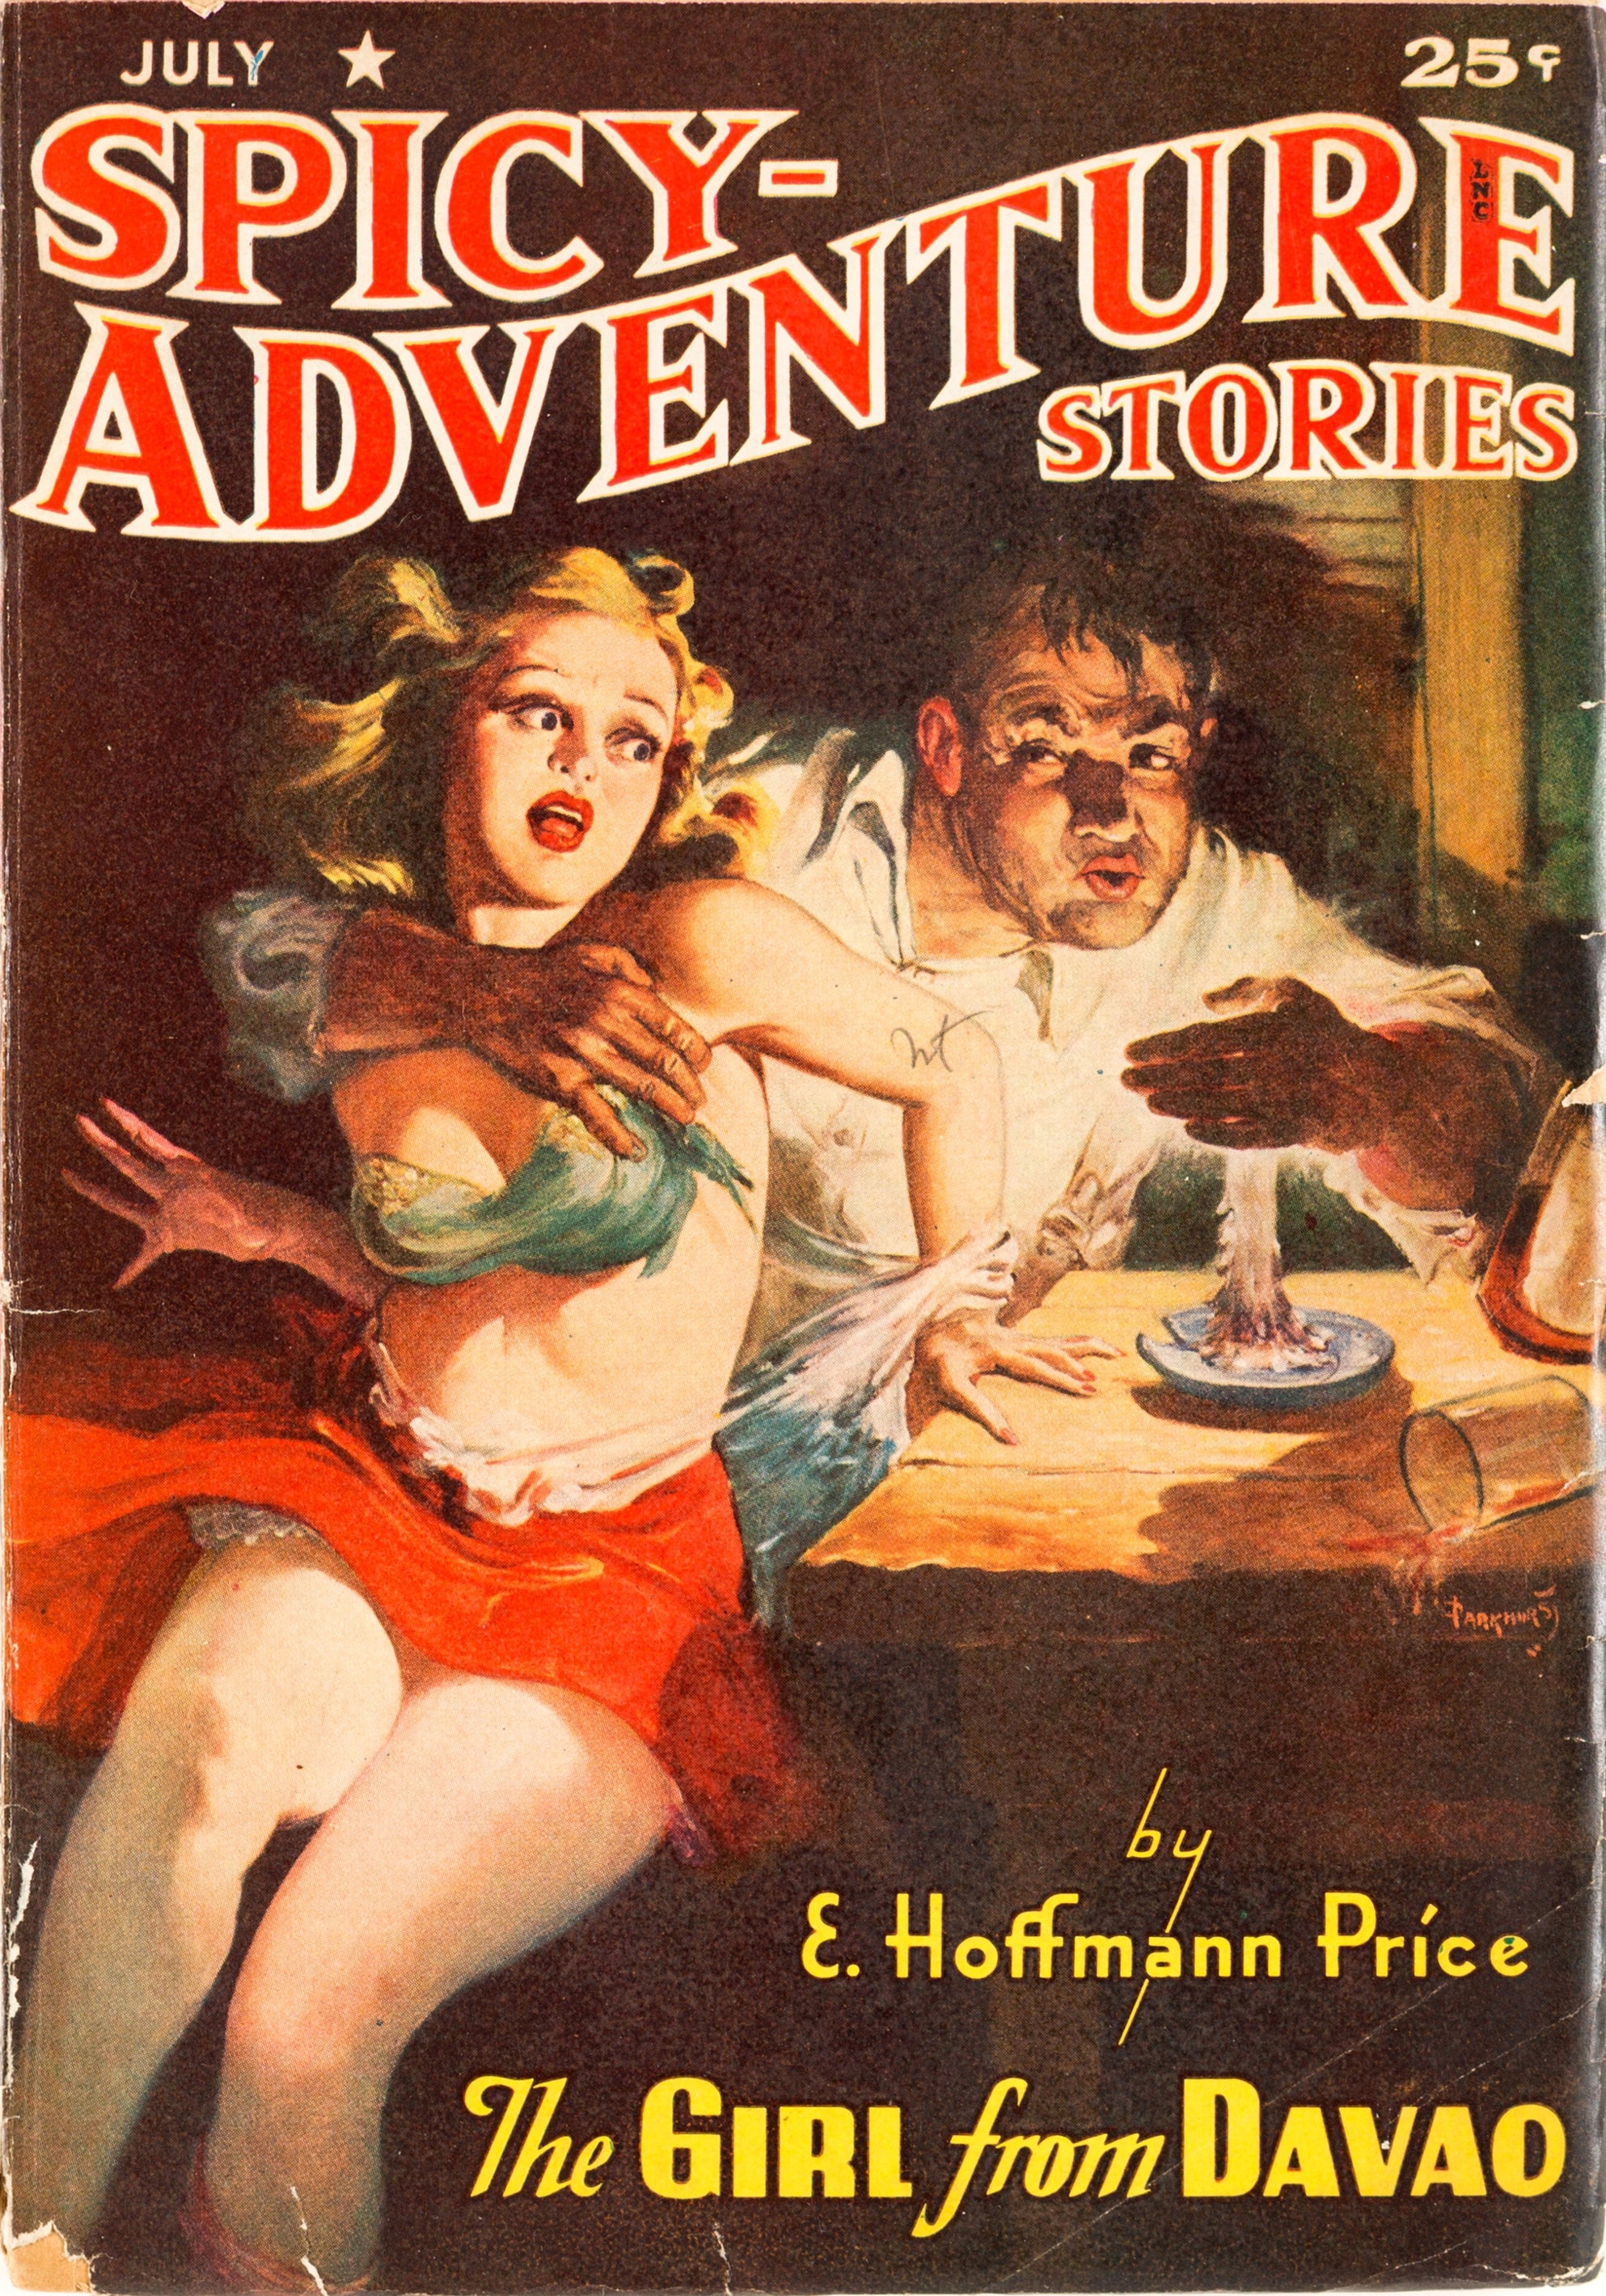 Spicy Adventure Stories - July 1942